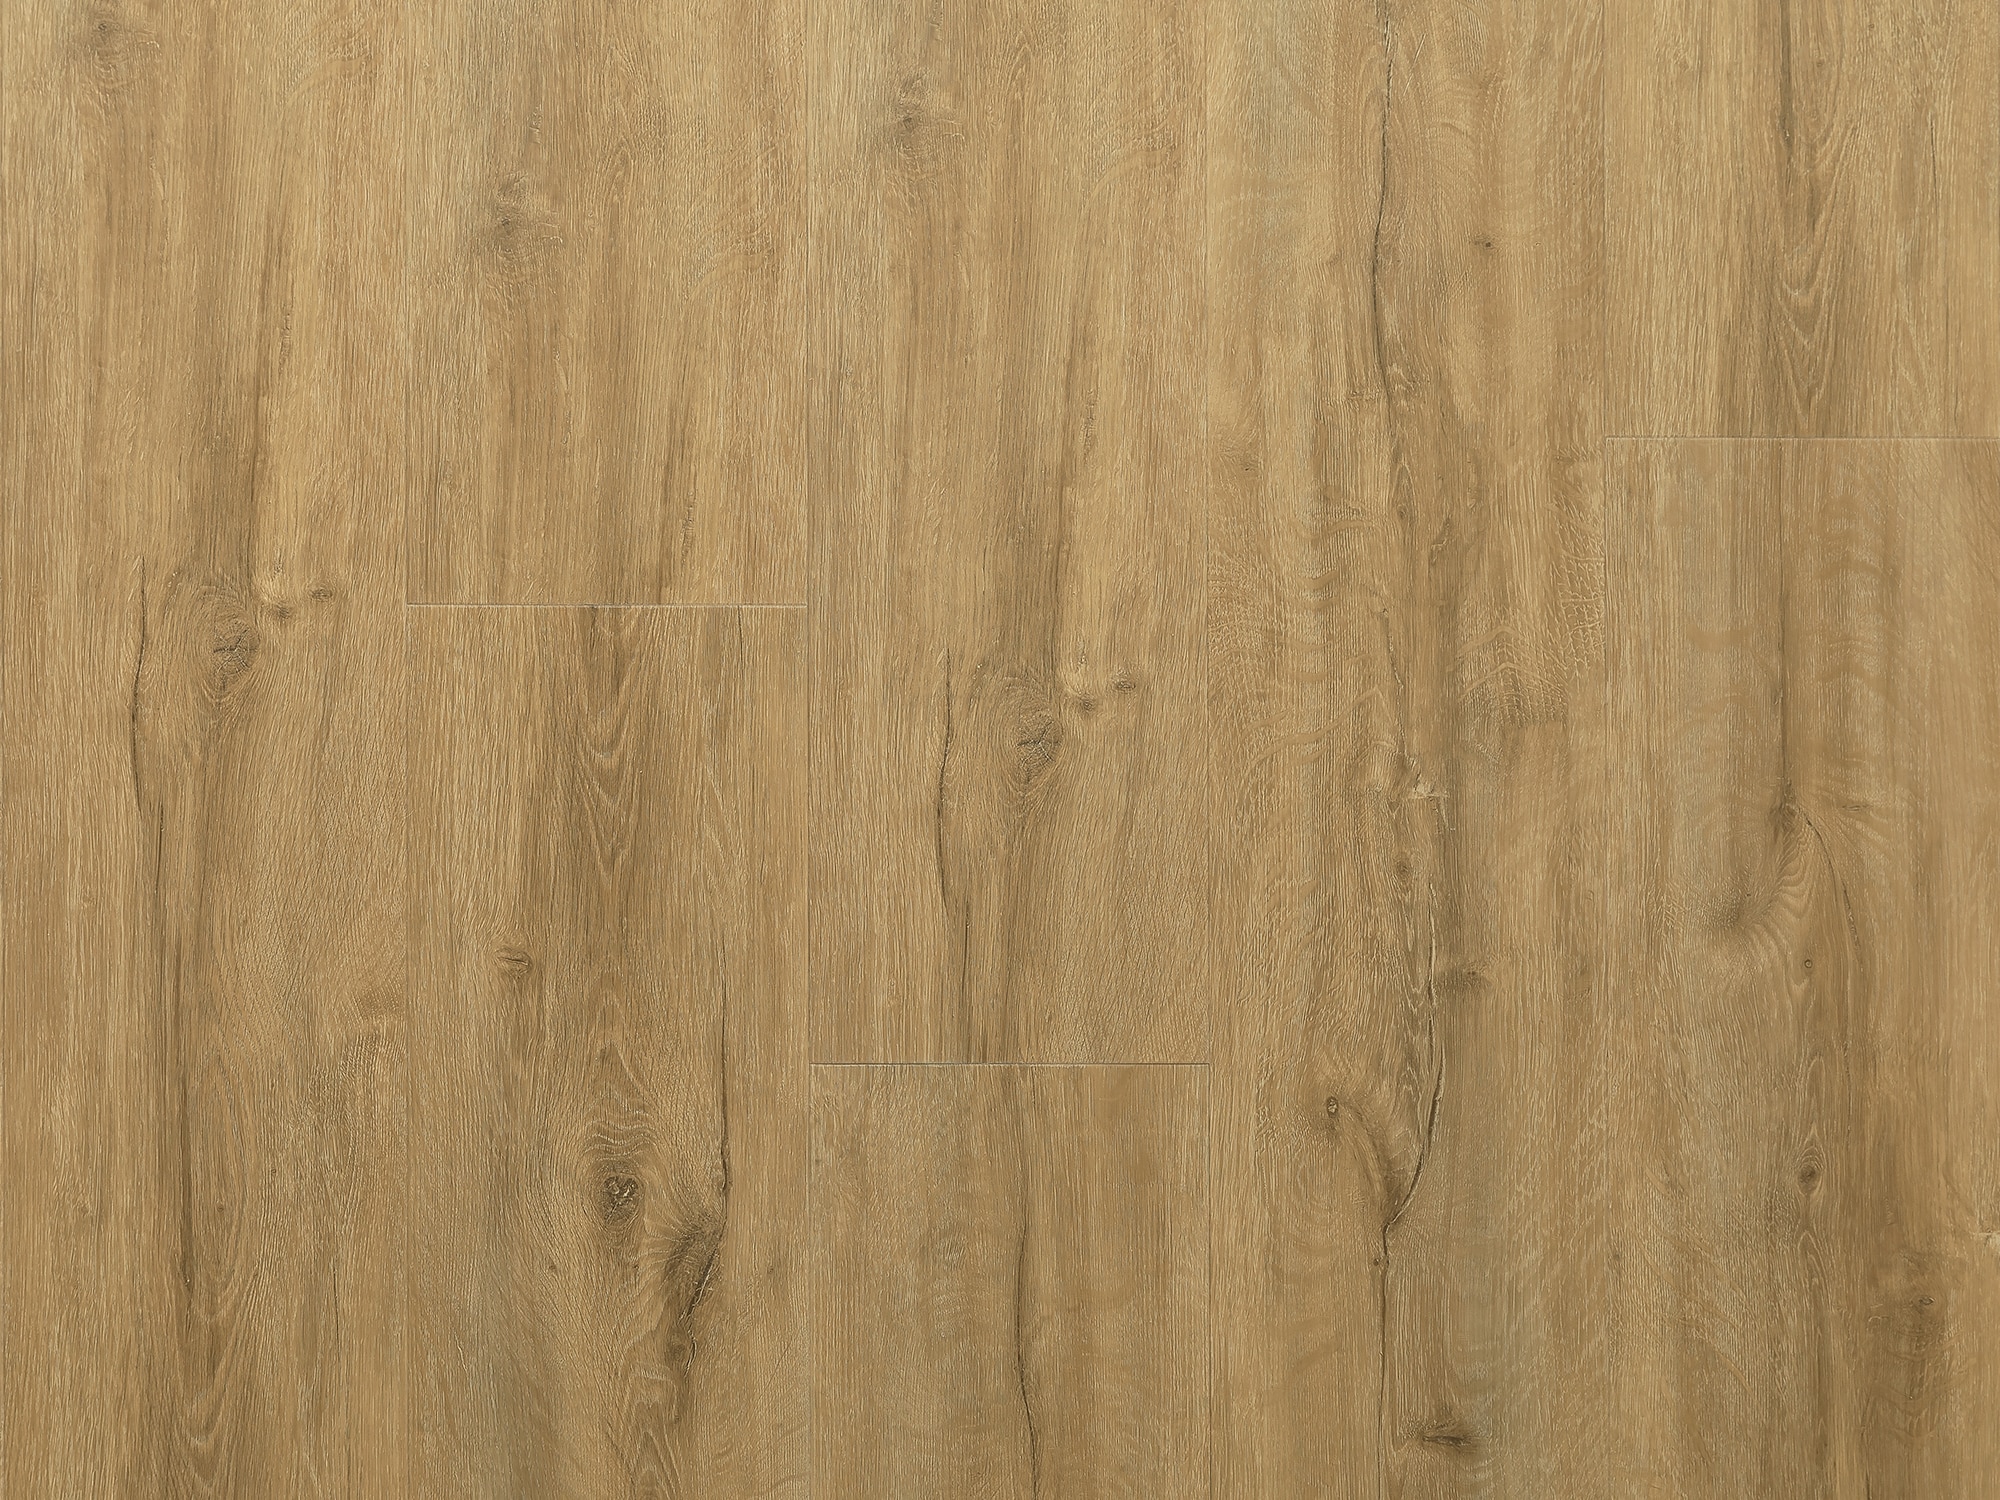 32”X 7” 4 Sheets 1/16” Thickness. 6 Sq Ft White Oak Wood Veneer 